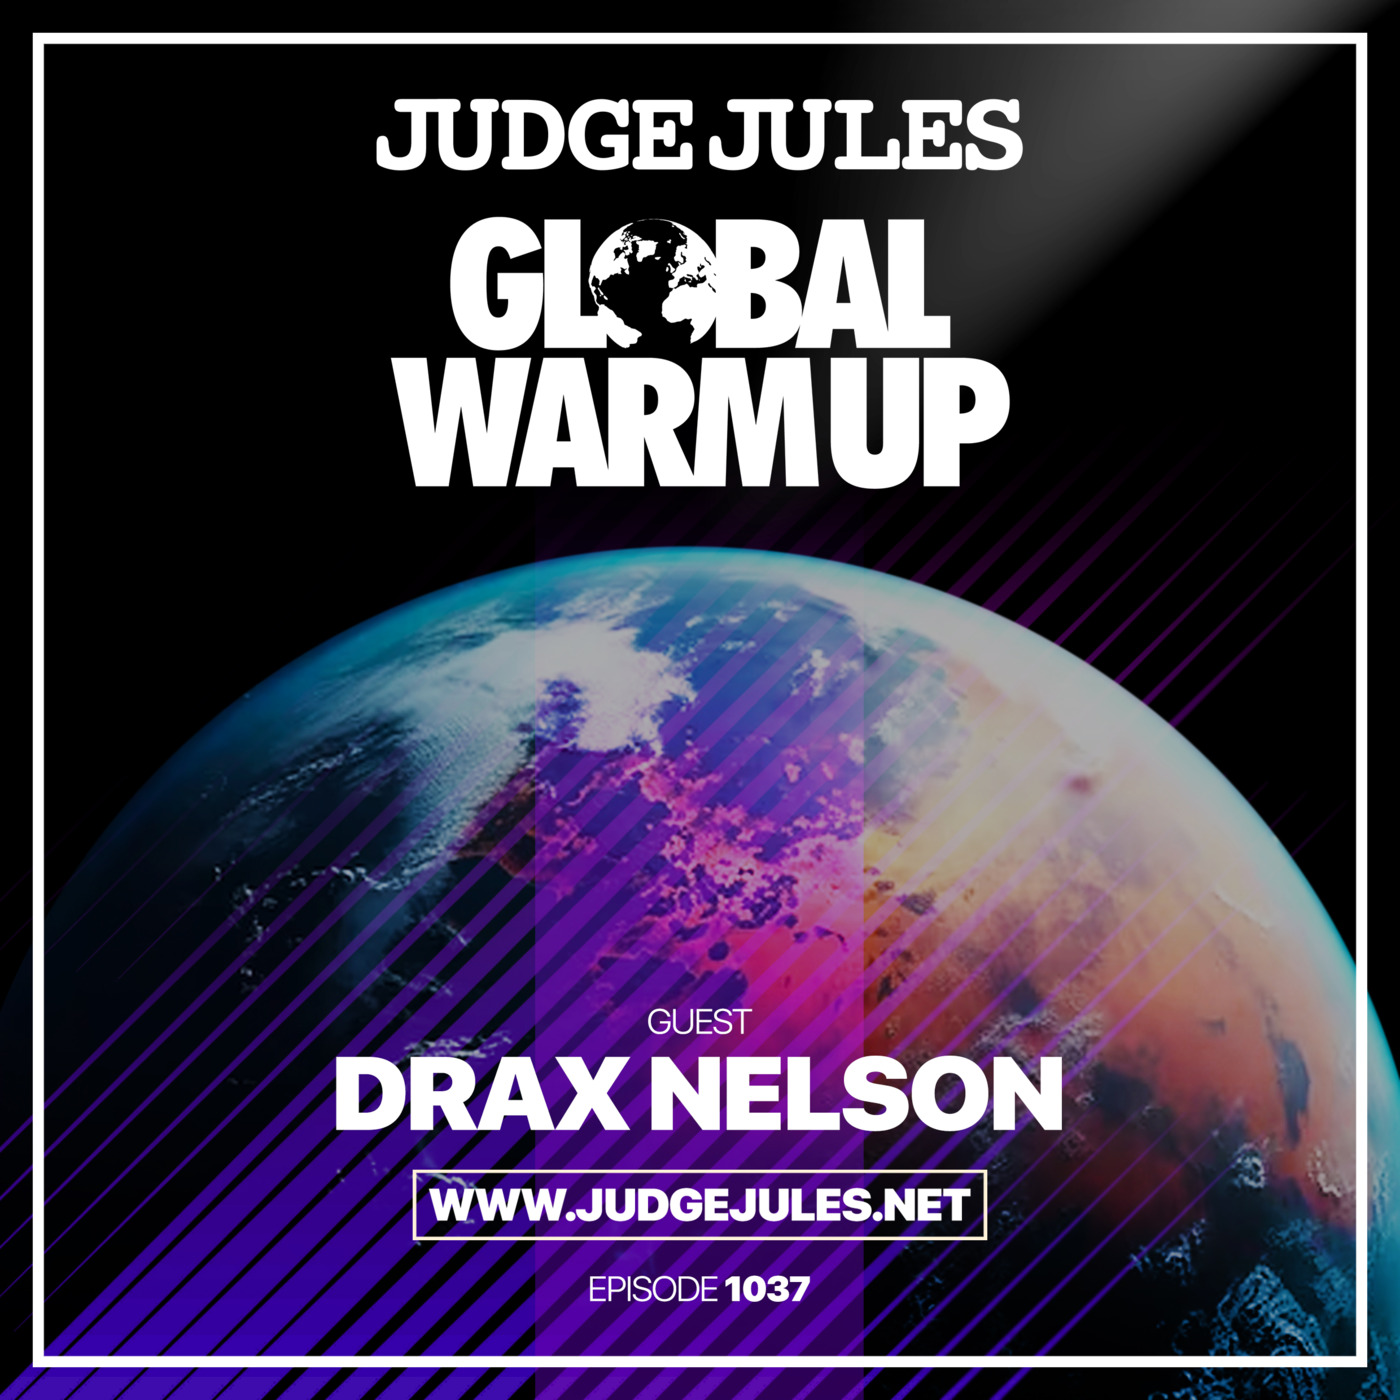 Episode 1037: JUDGE JULES PRESENTS THE GLOBAL WARM UP EPISODE 1037